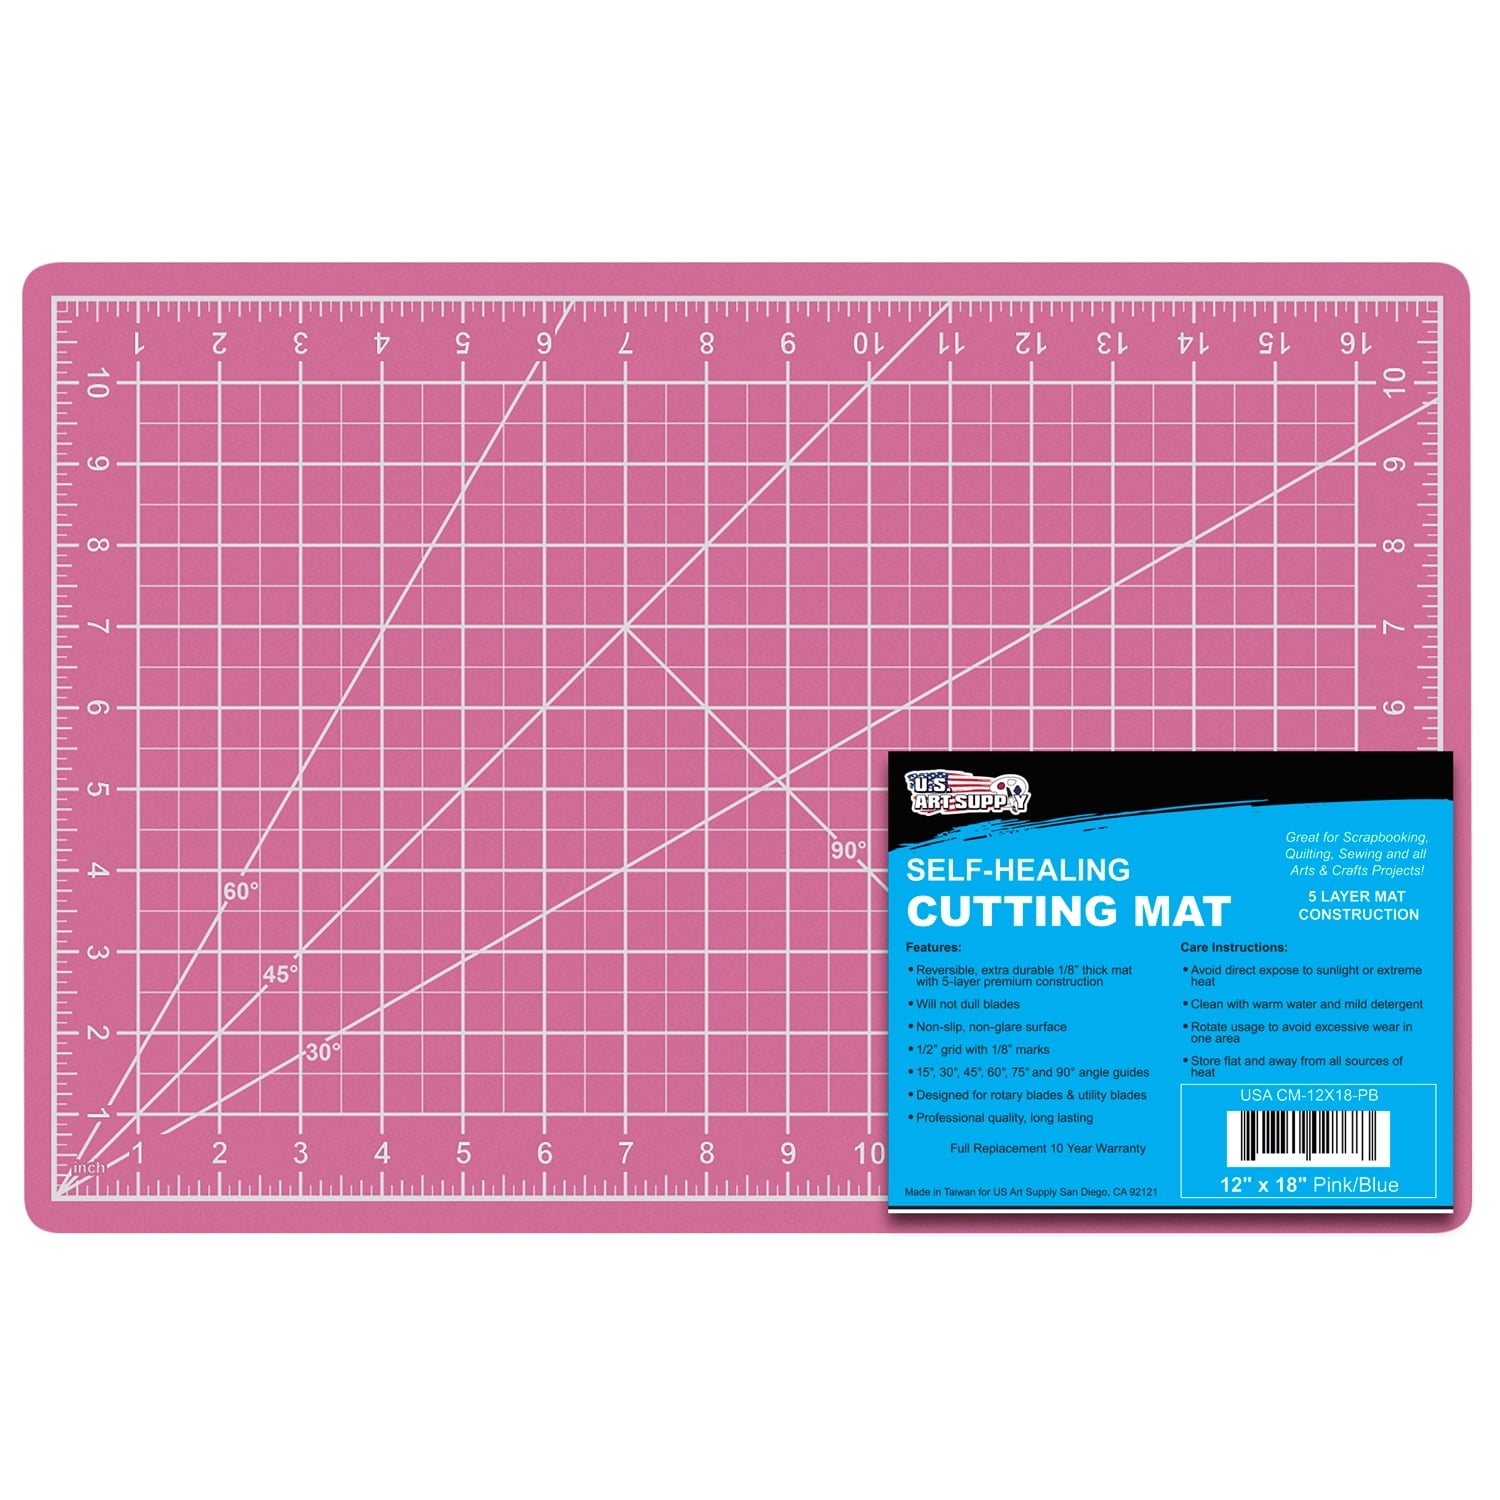 Truecut Cutting Mat 24 X 36 Self-healing the Grace Company 